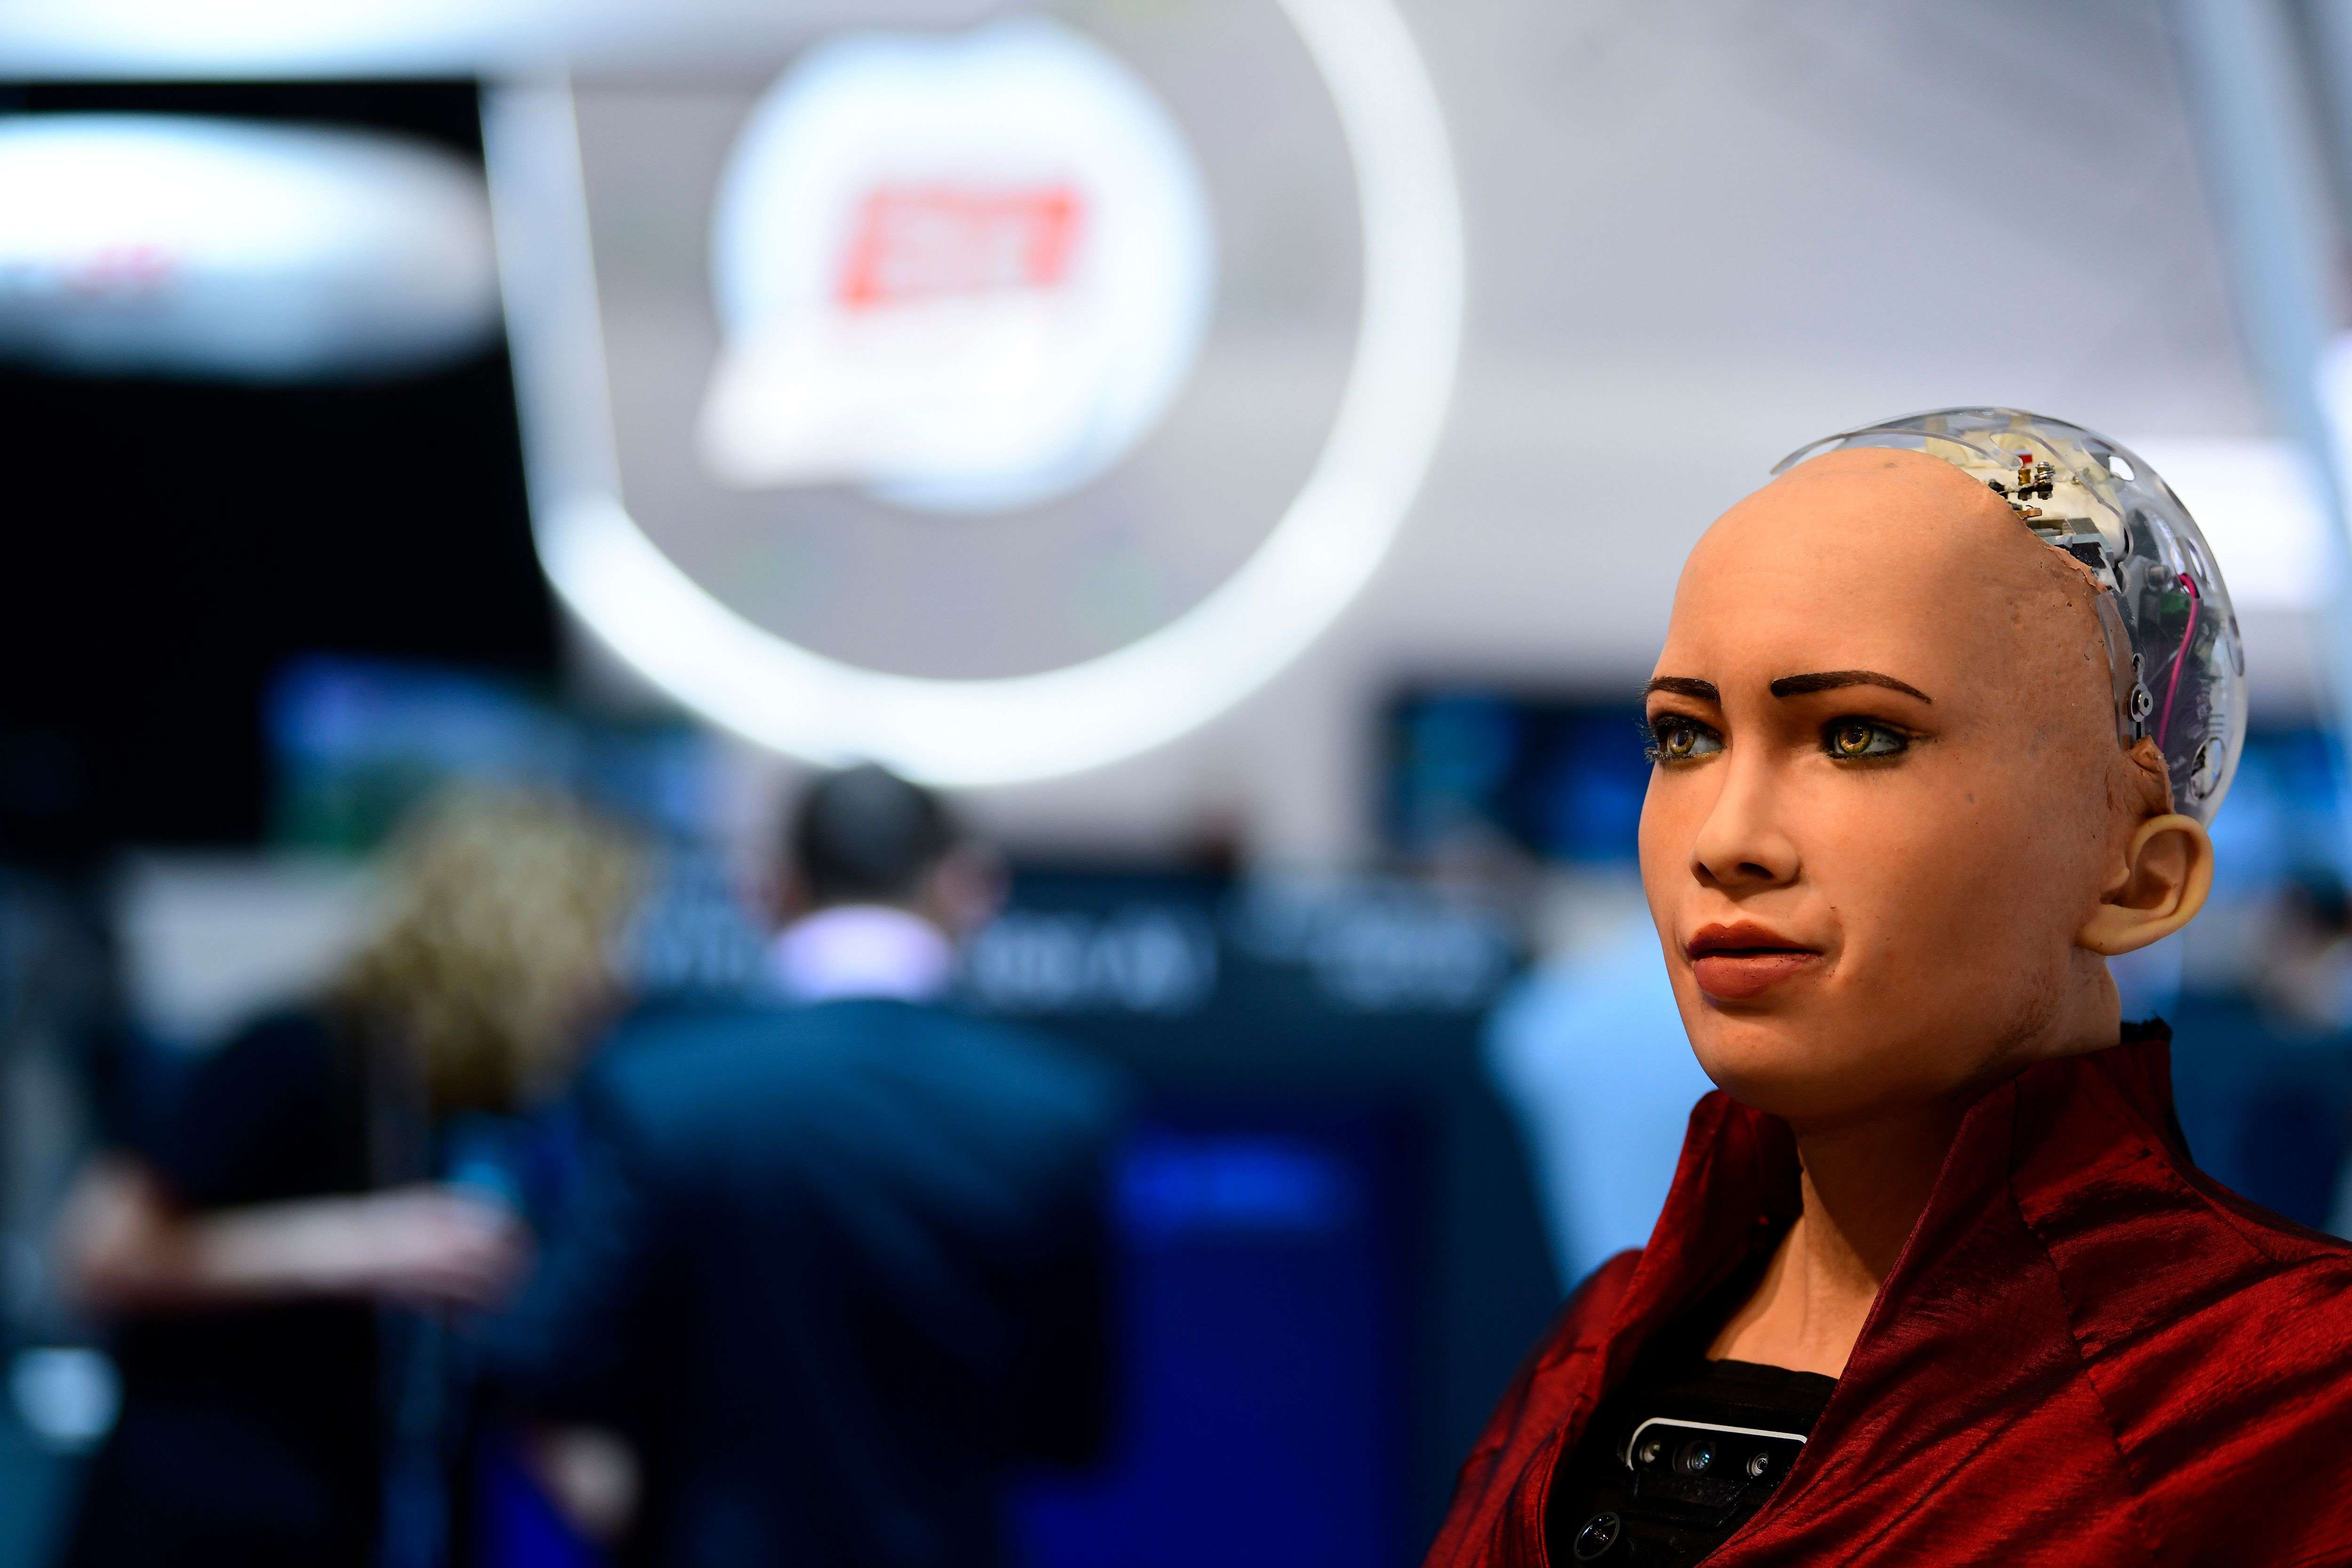 Sophia the social robot